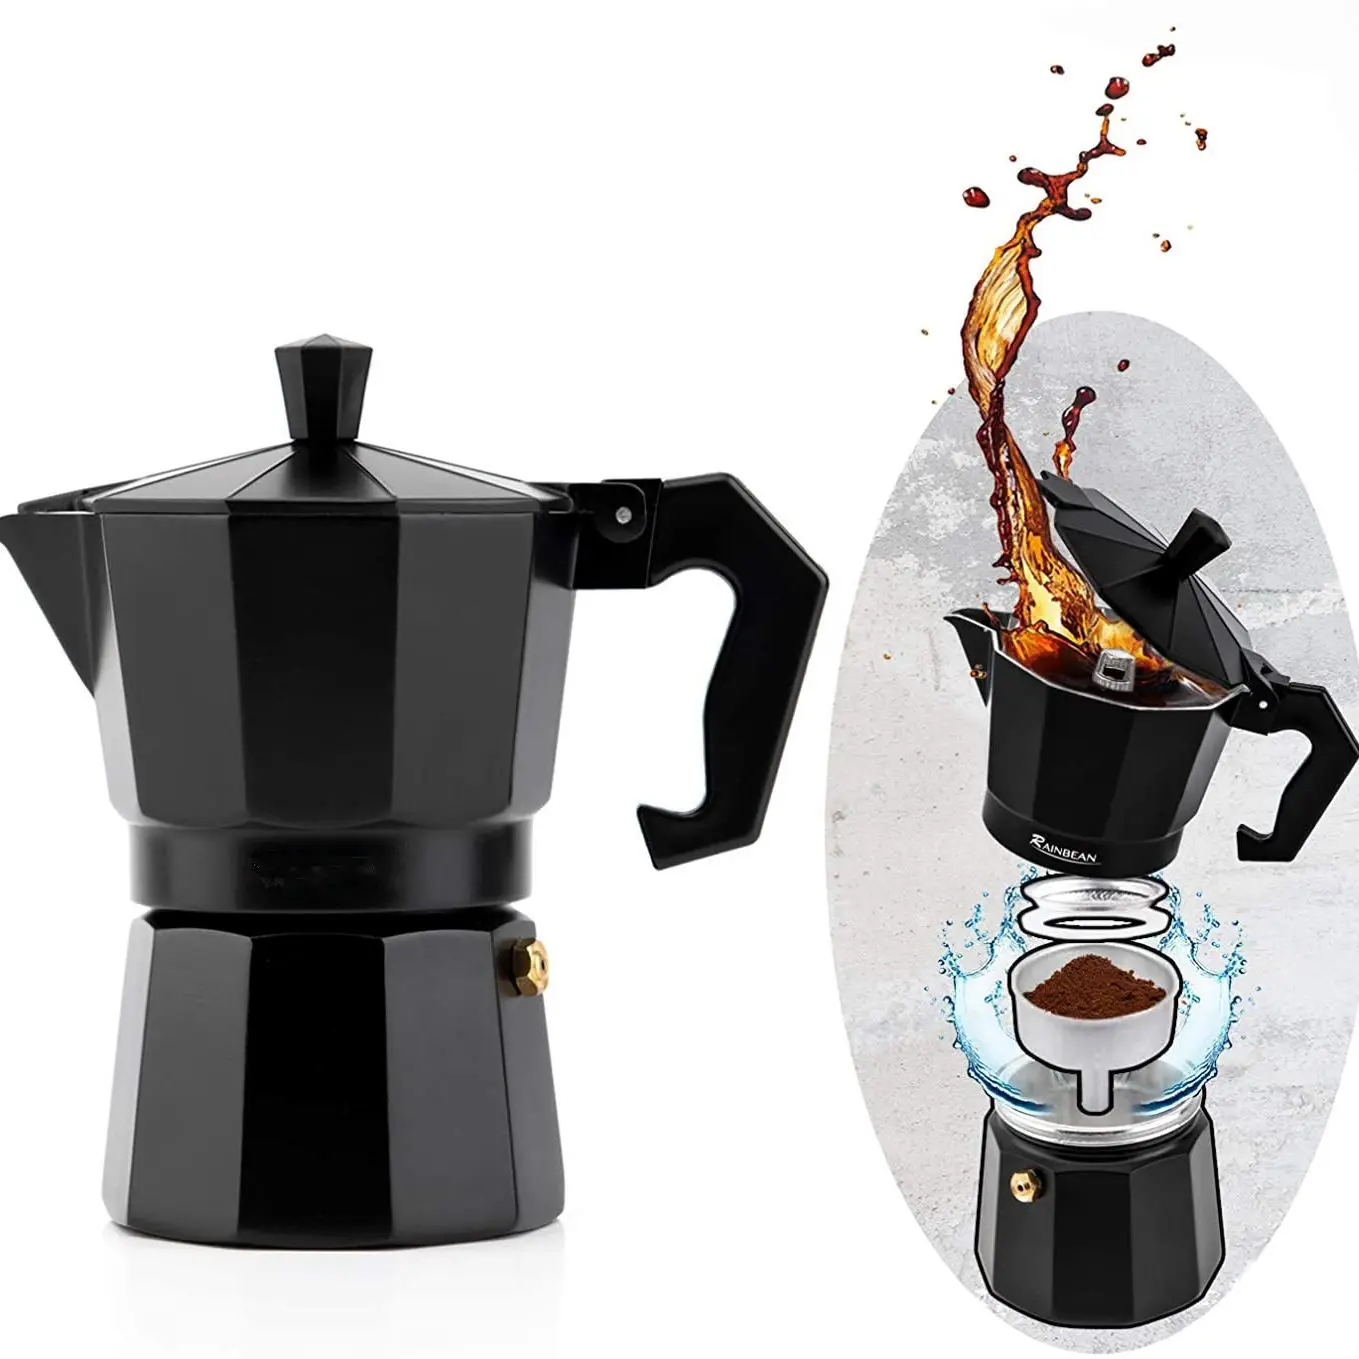 https://ae01.alicdn.com/kf/Sa4949fd6e4234923a68fd4acf527446b7/Alloy-Coffee-Maker-Moka-Pot-Aluminum-Espresso-Coffee-Maker-Stovetop-Camping-Manual-Cuban-Coffee-Maker-50.jpg